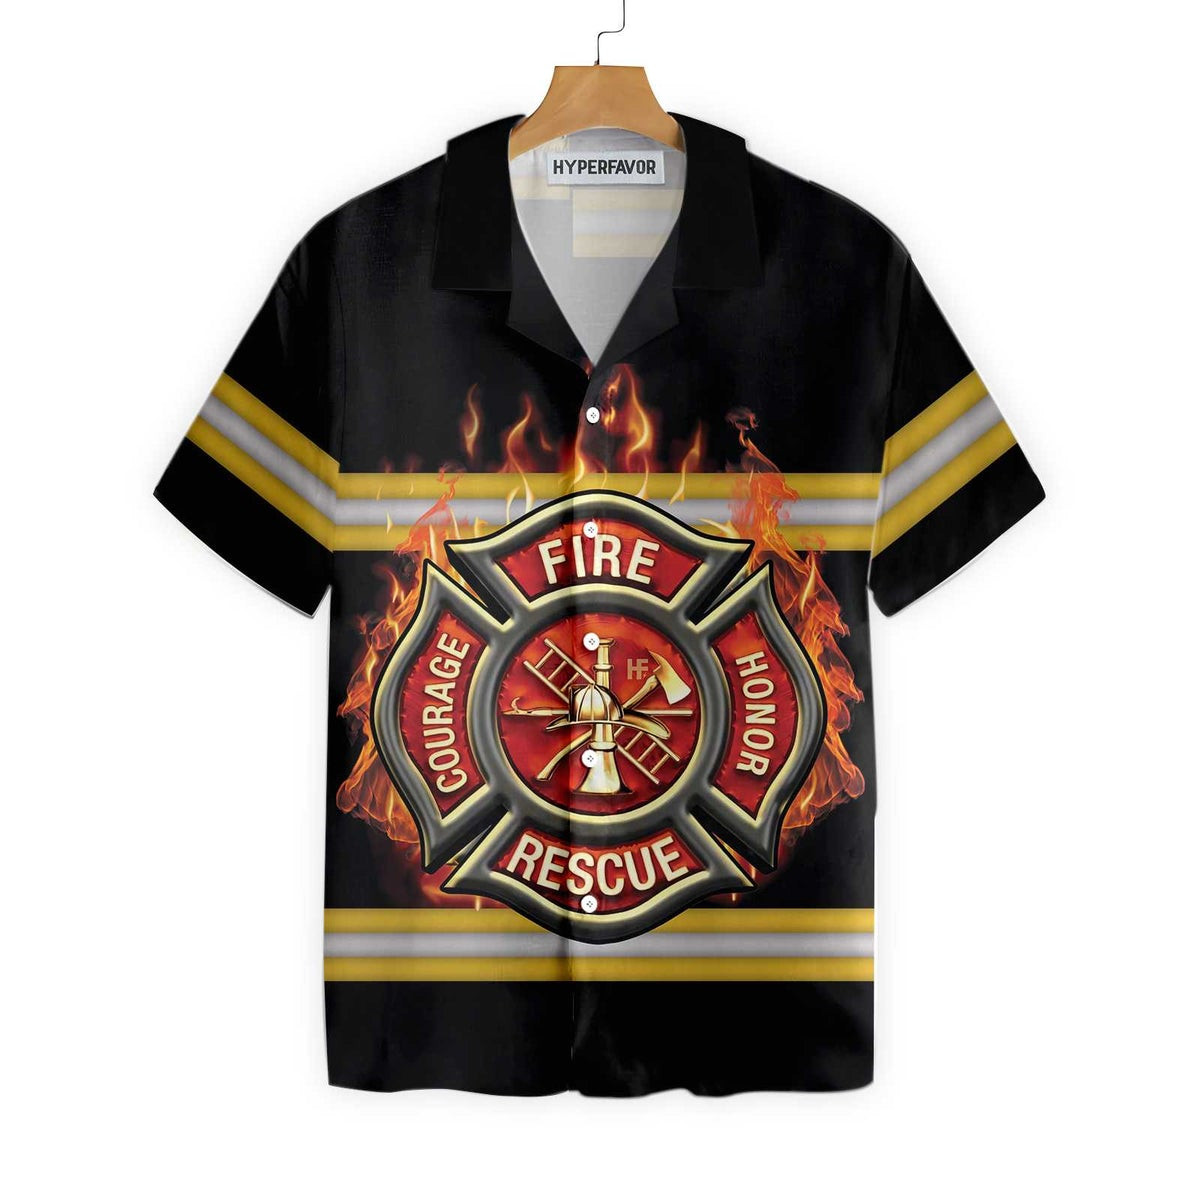 Courage And Honor Fire Dept Badge Firefighter Hawaiian Shirt Uniform And Cross Axes Firefighter Shirt For Men